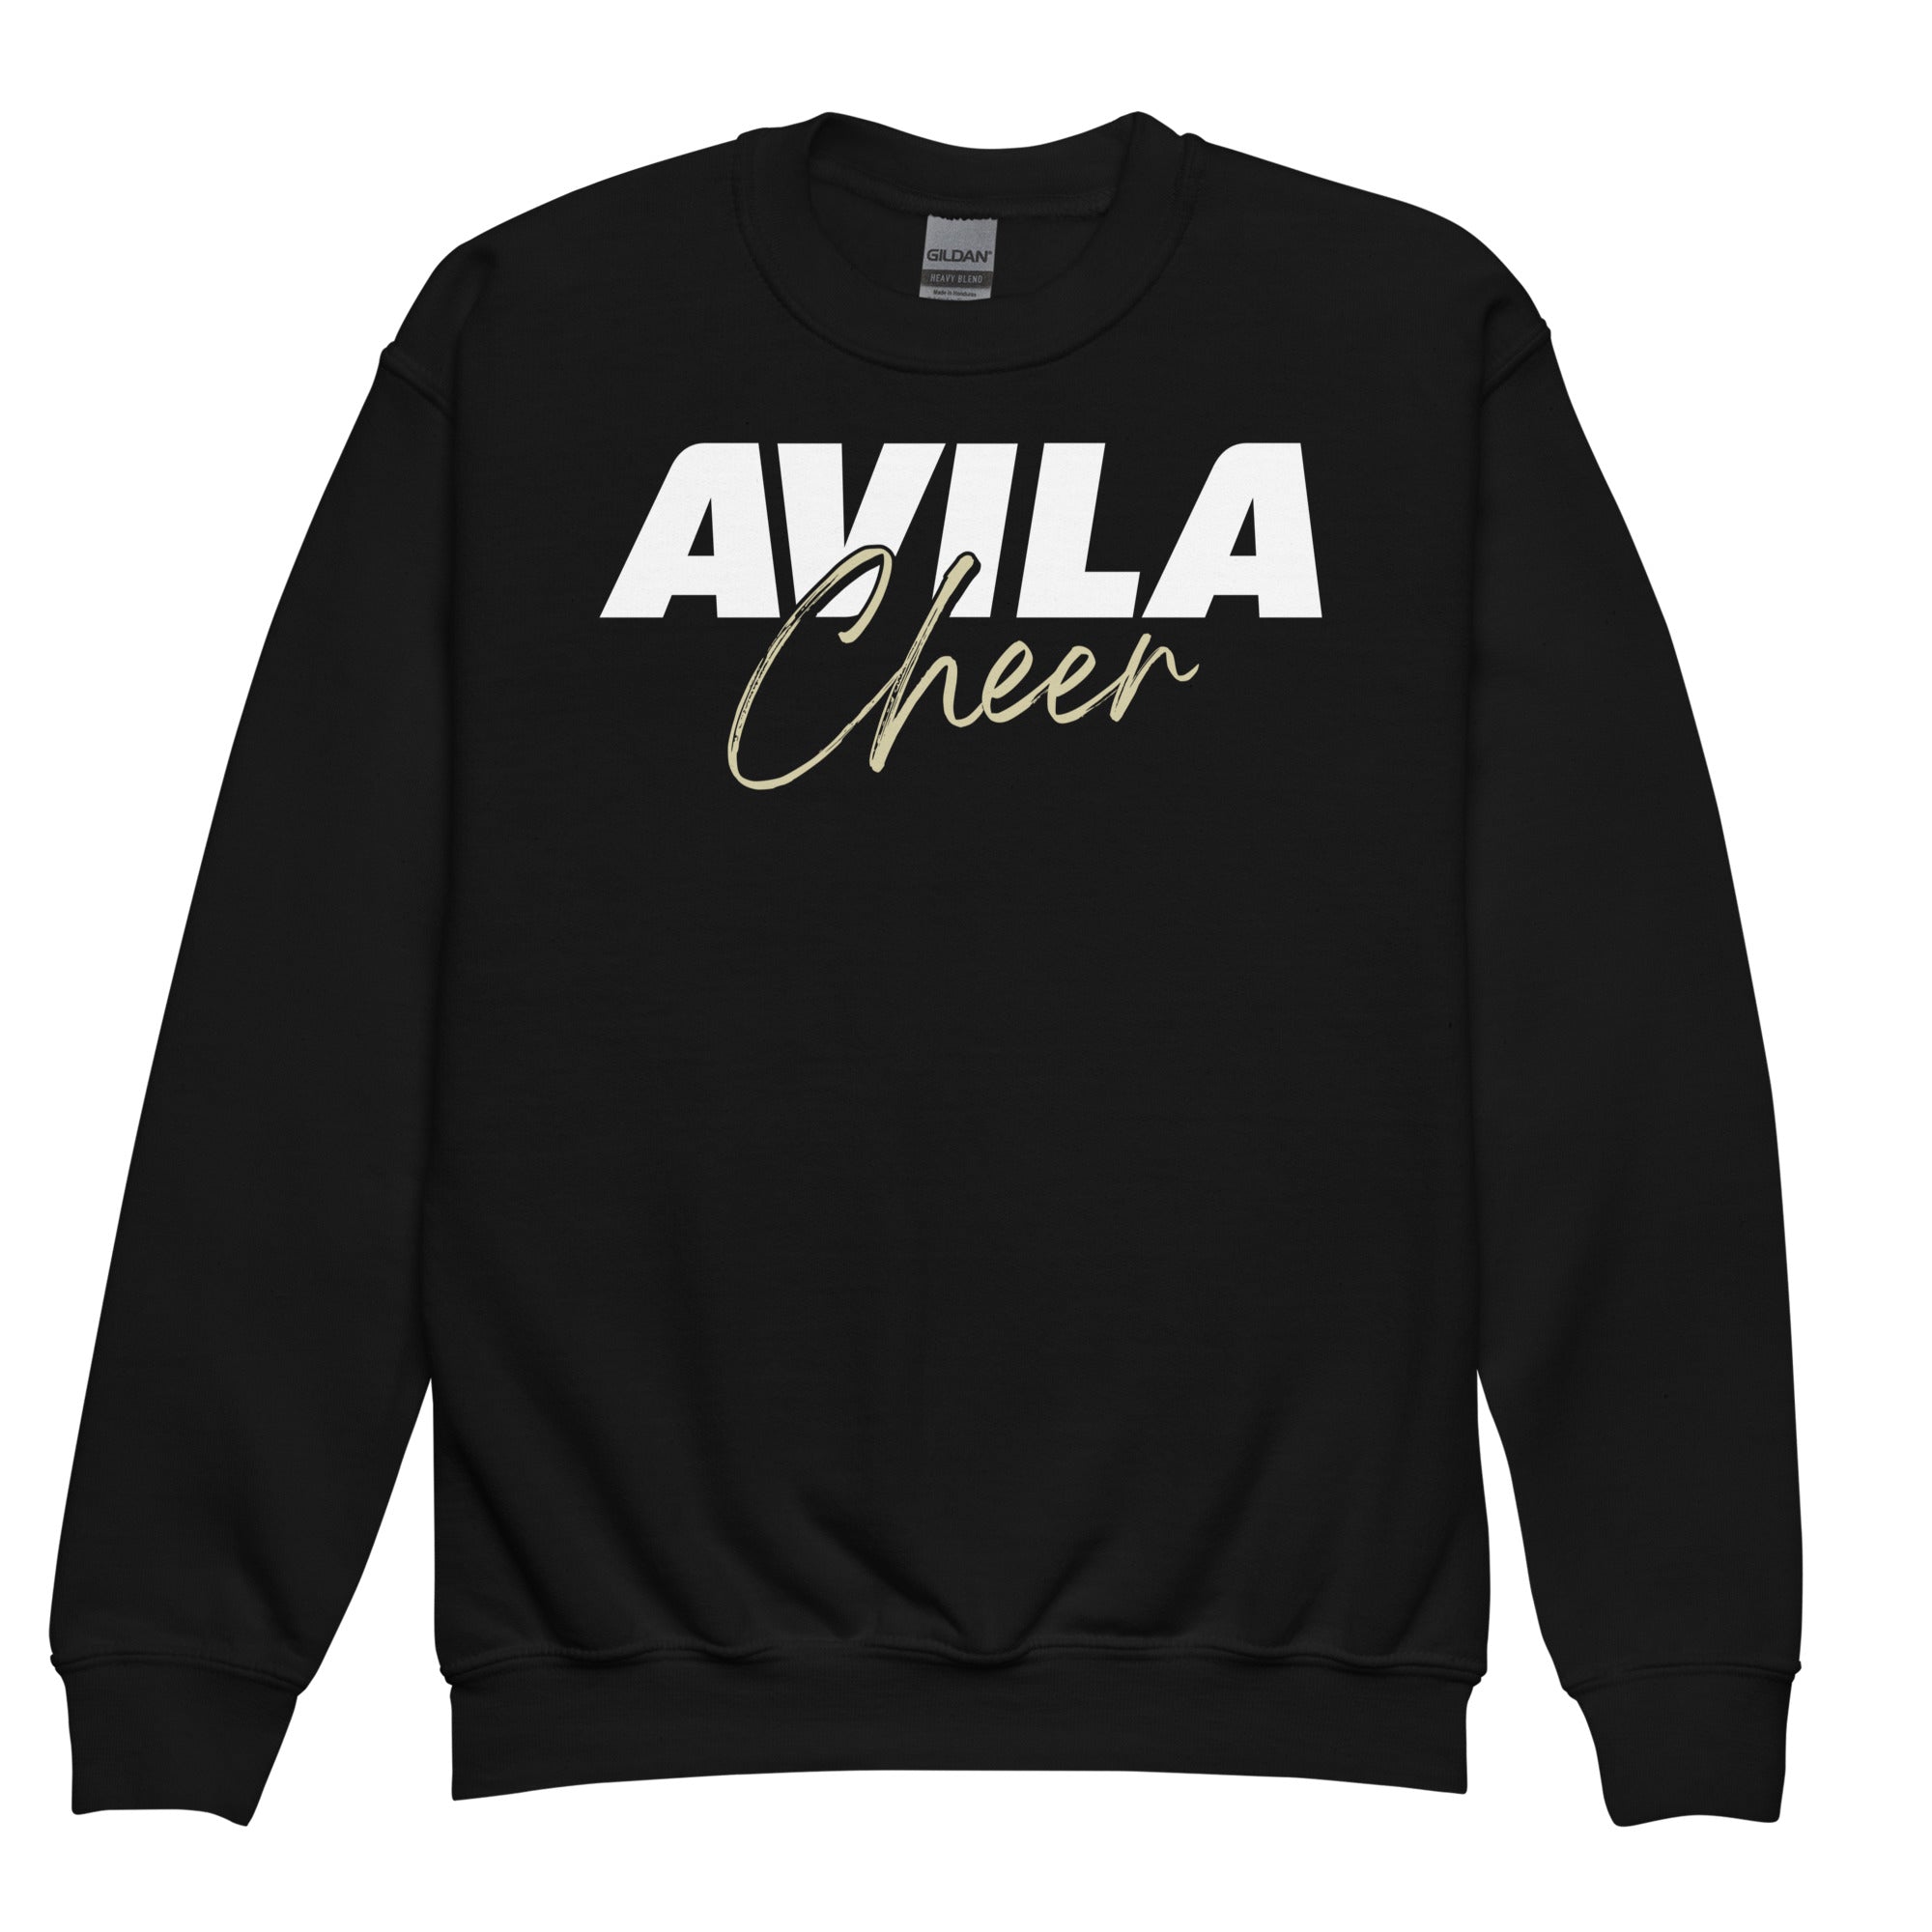 Avila University Cheer Youth Crew Neck Sweatshirt